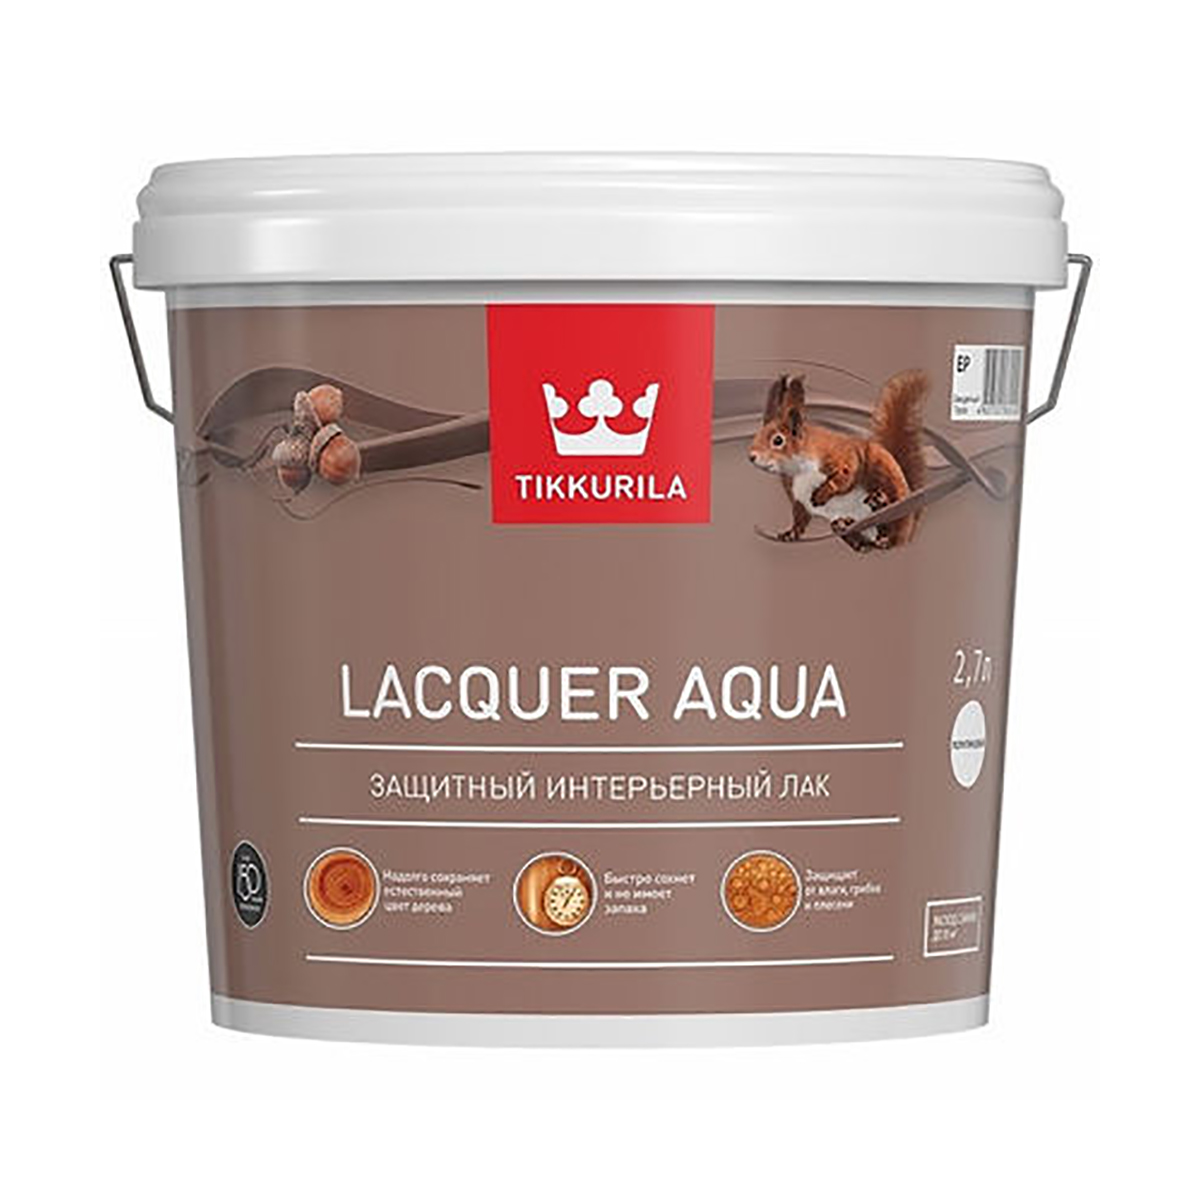 Лак Tikkurila Euro Lacquer Aqua (700001138) бесцветный 2.7л краска euro extra 20 евро 20 tikkurila 9л бесцветный база с